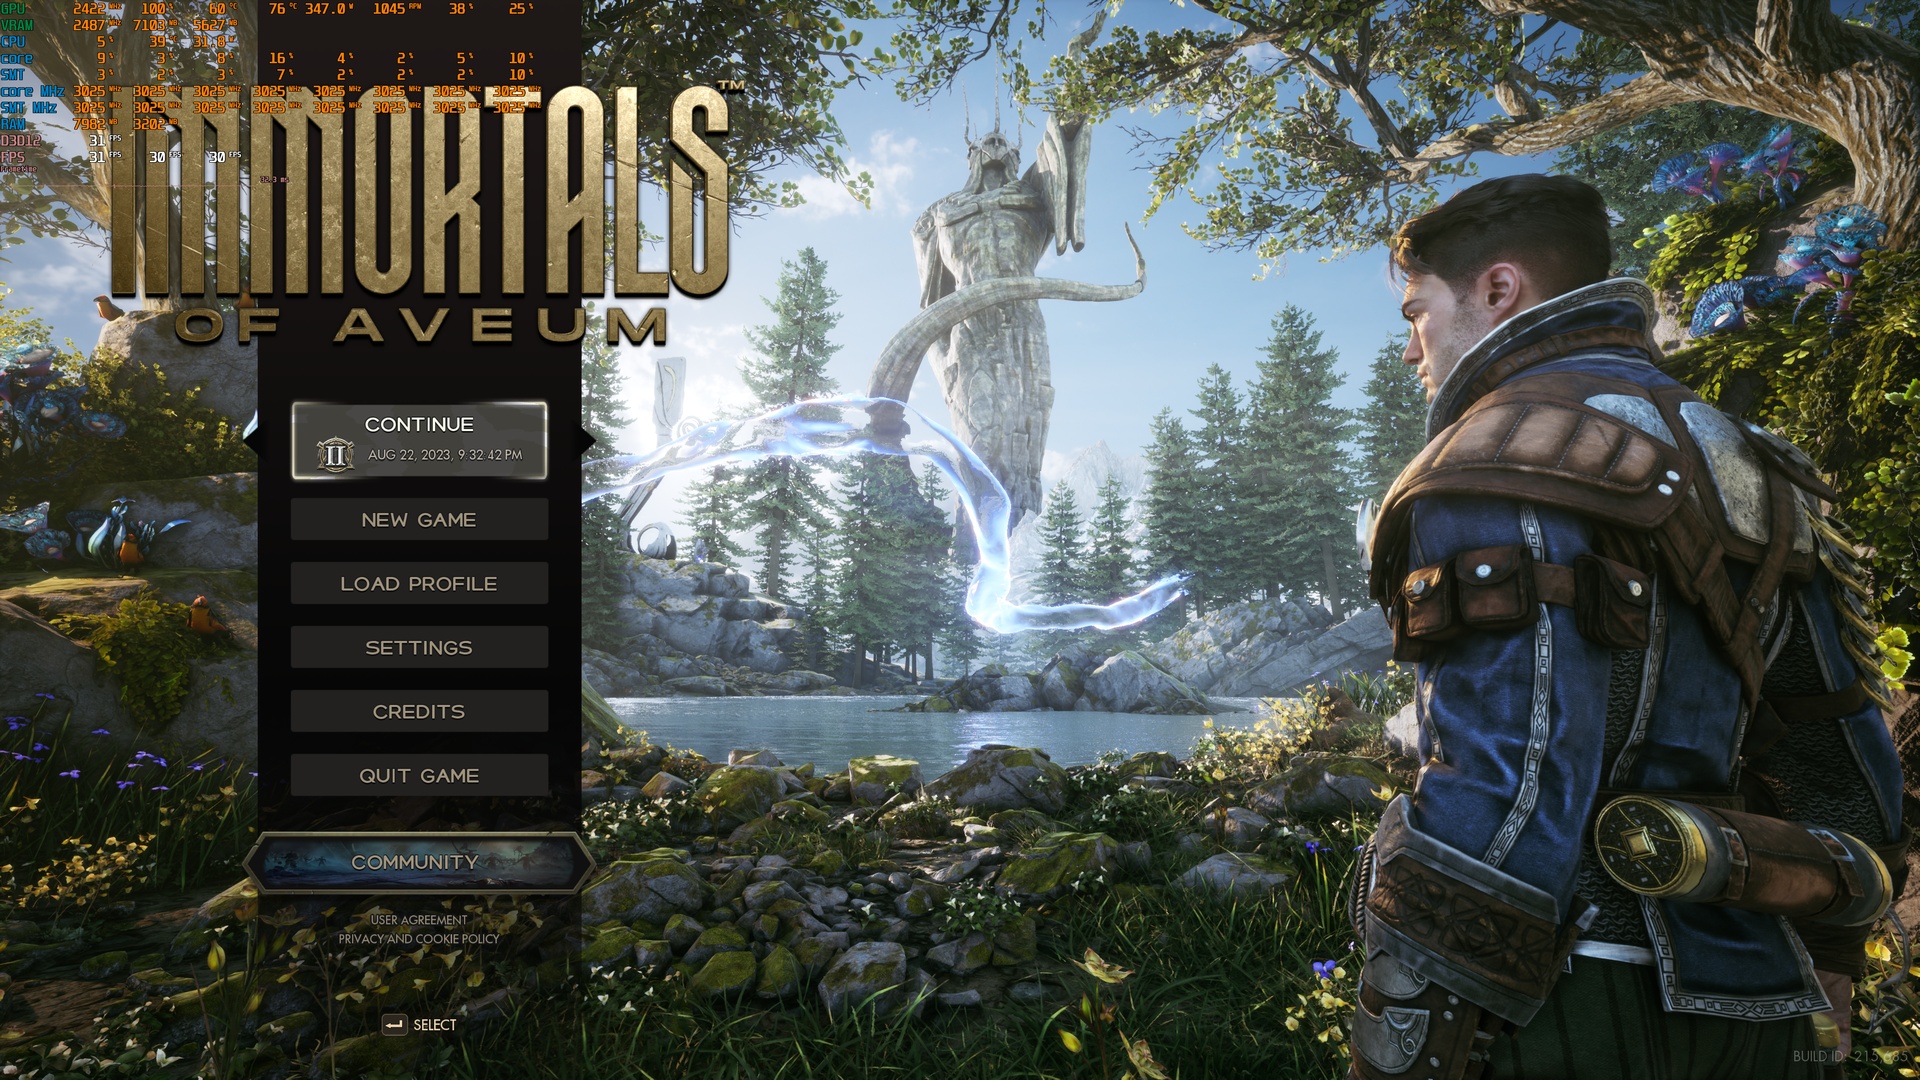 Immortals of Aveum: New Magic-Slinging FPS Game - Overclockers UK